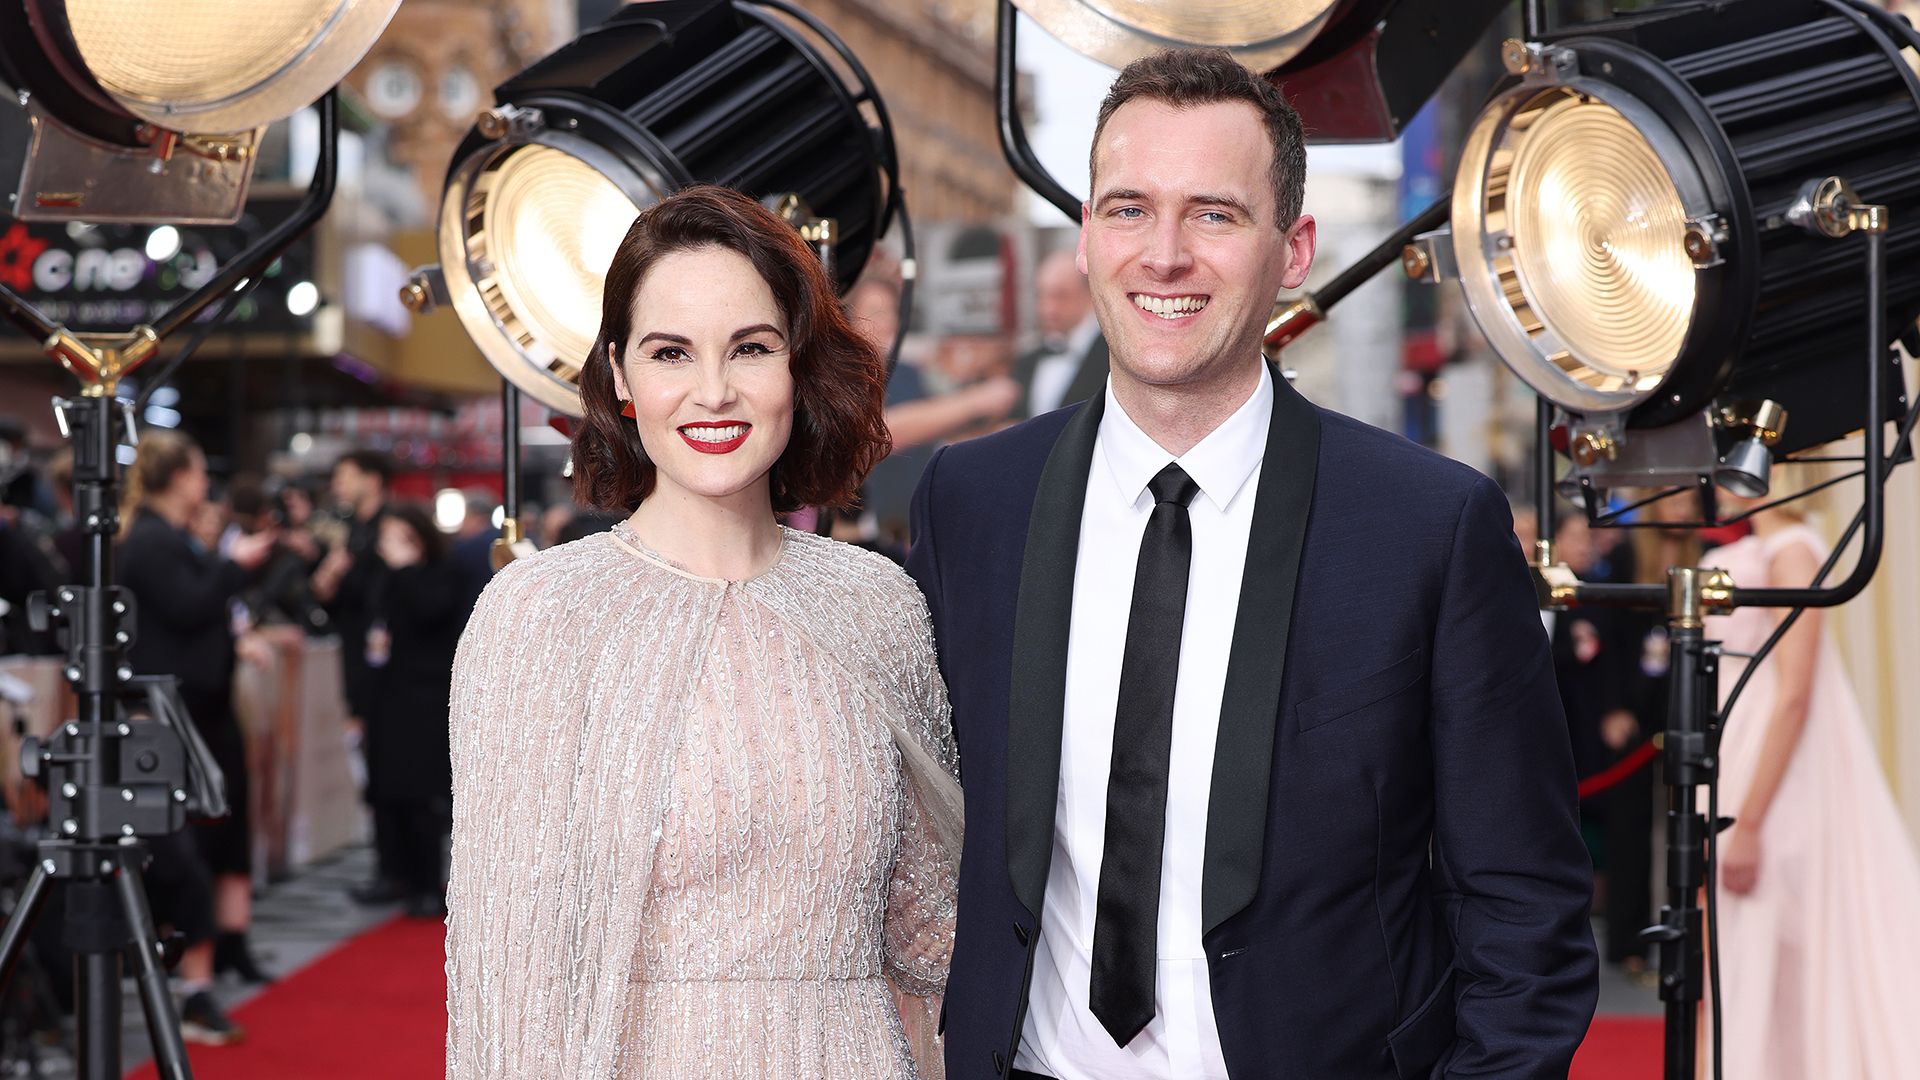 Michelle Dockery and Jasper Waller-Bridge at the red carpet premiere of Downton Abbey: A New Era